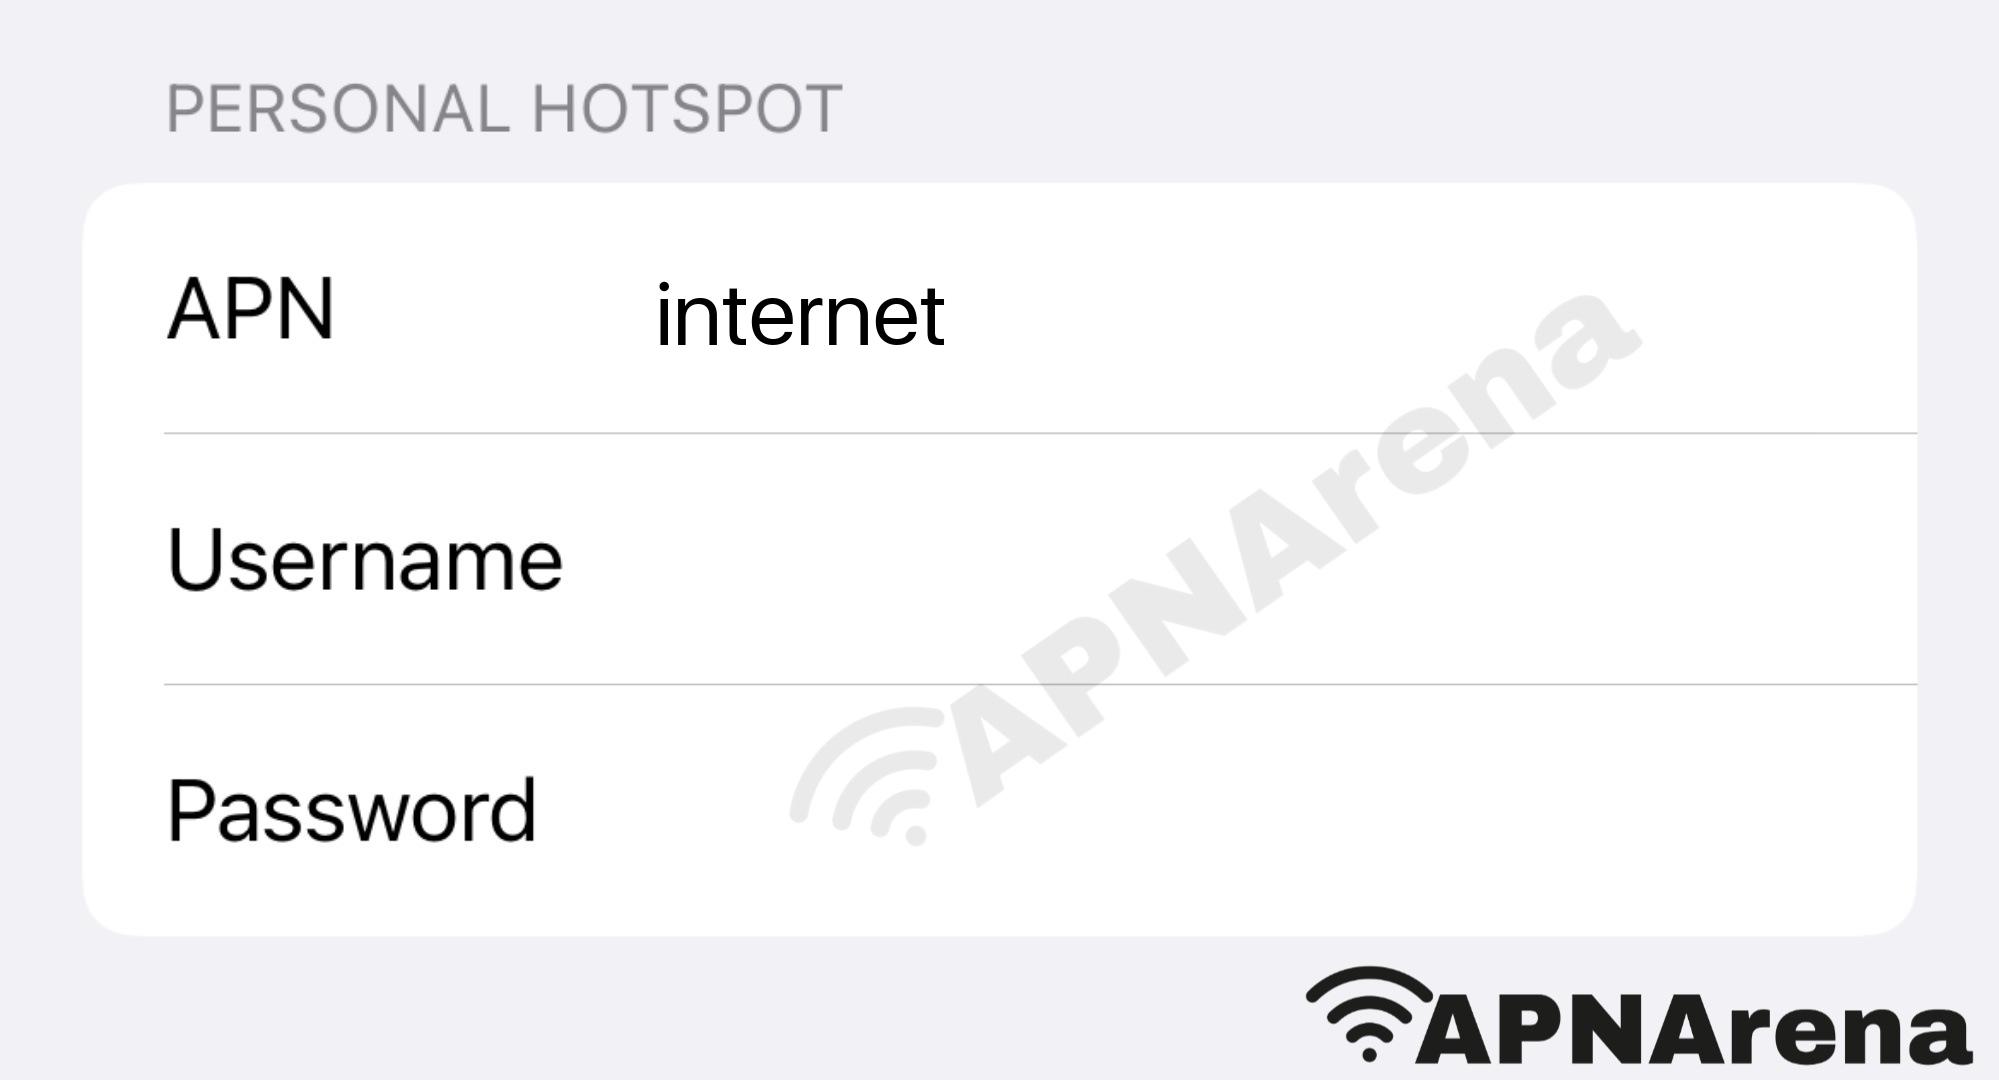 LaoTelecom Personal Hotspot Settings for iPhone